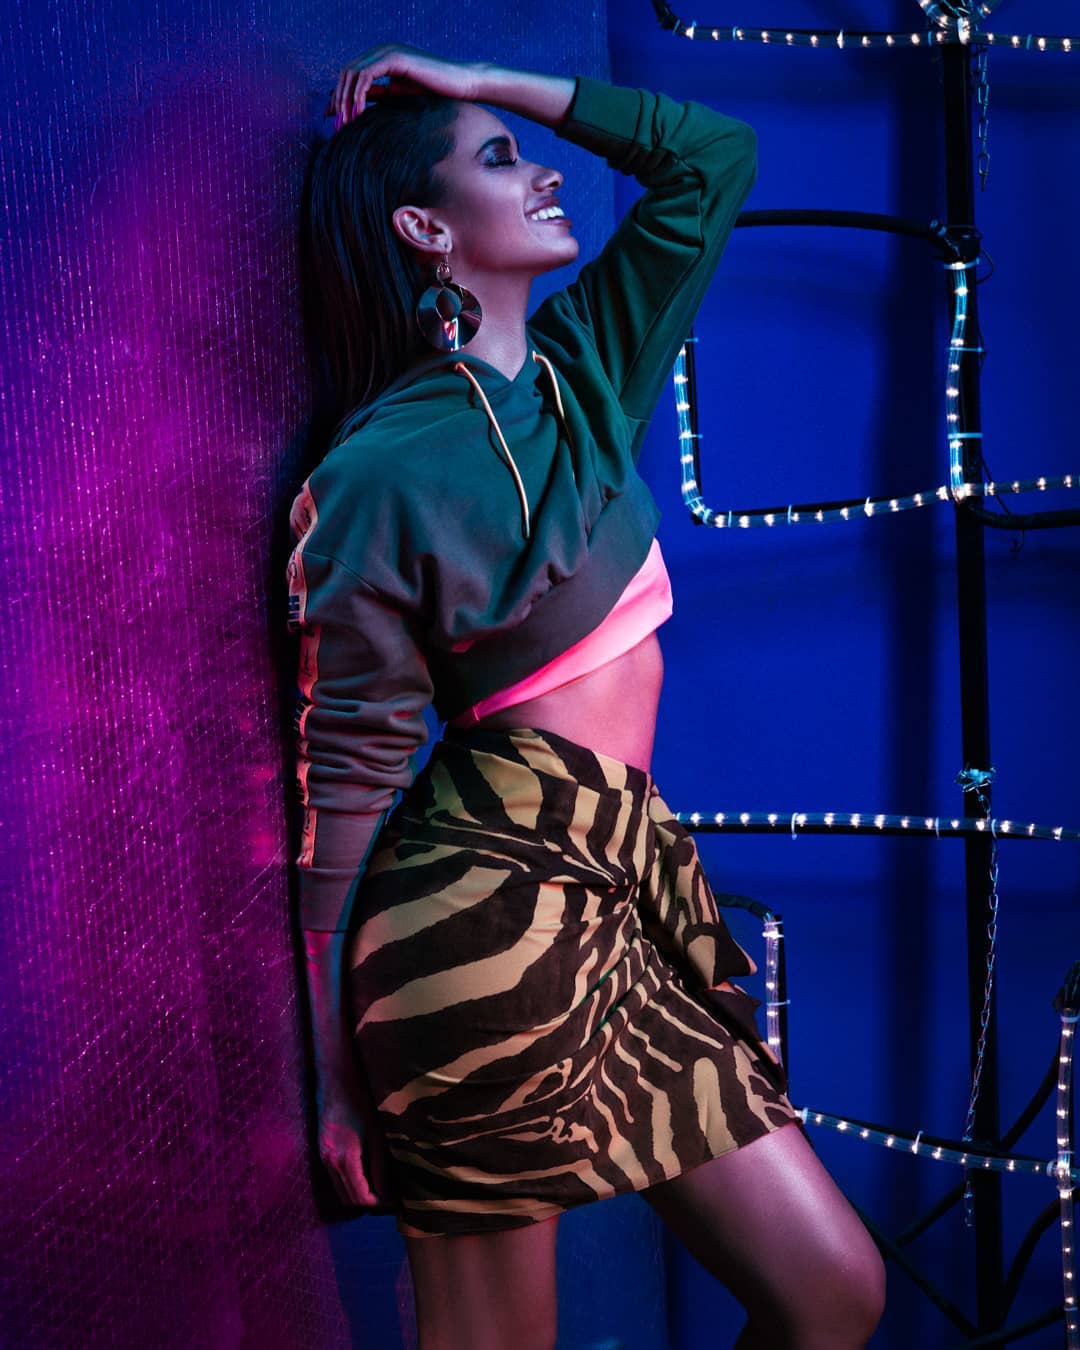 Peep Kim Jayde Robinson’s Breathtaking Spread for Cosmopolitan South Africa